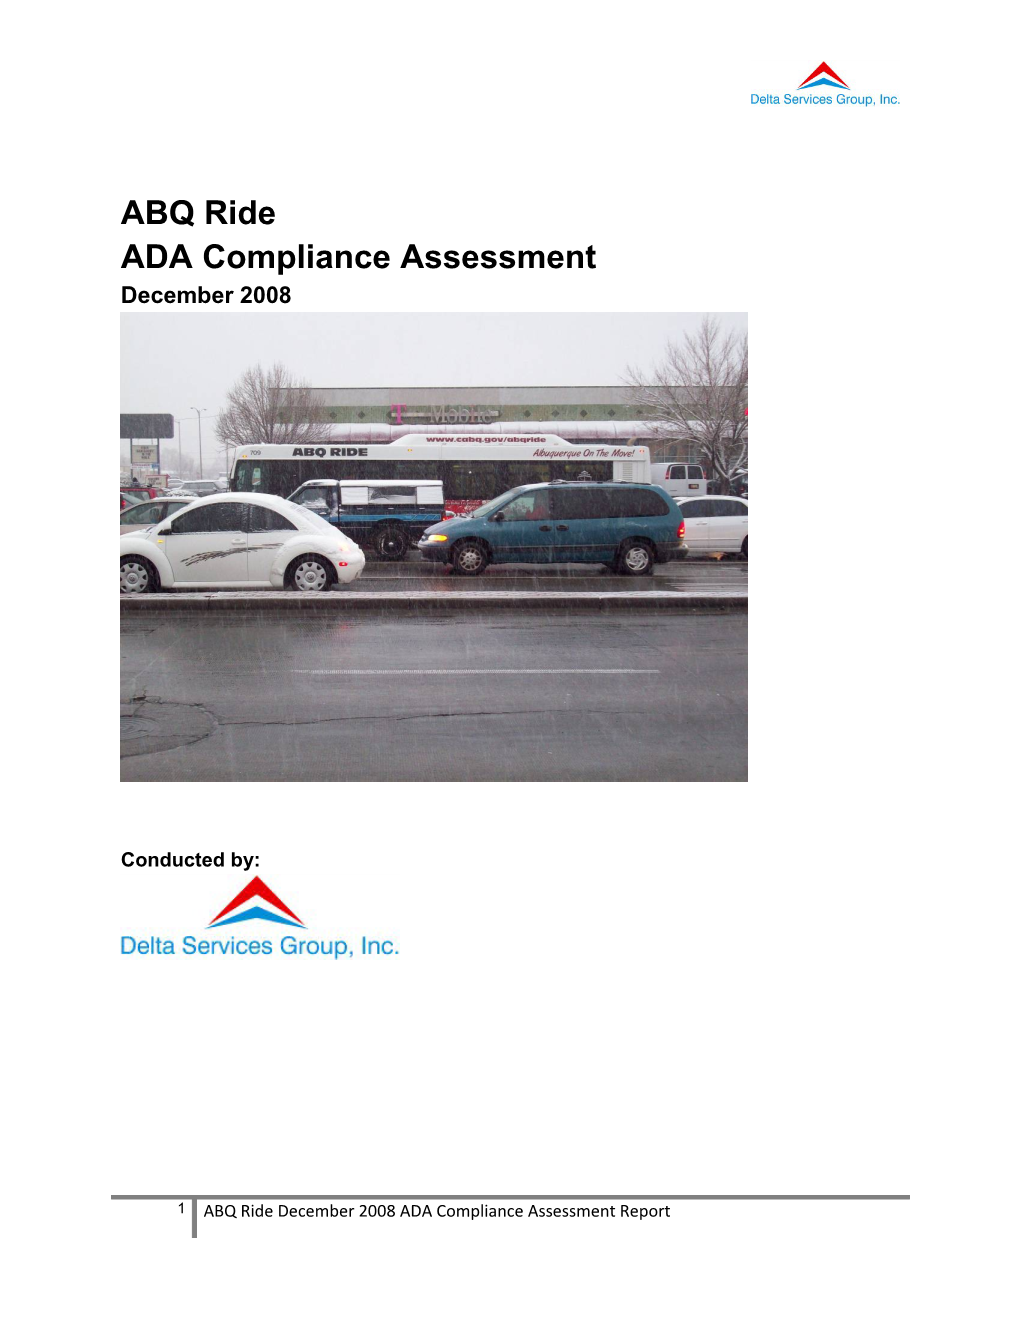 ABQ Ride 2008 ADA Assessment Report